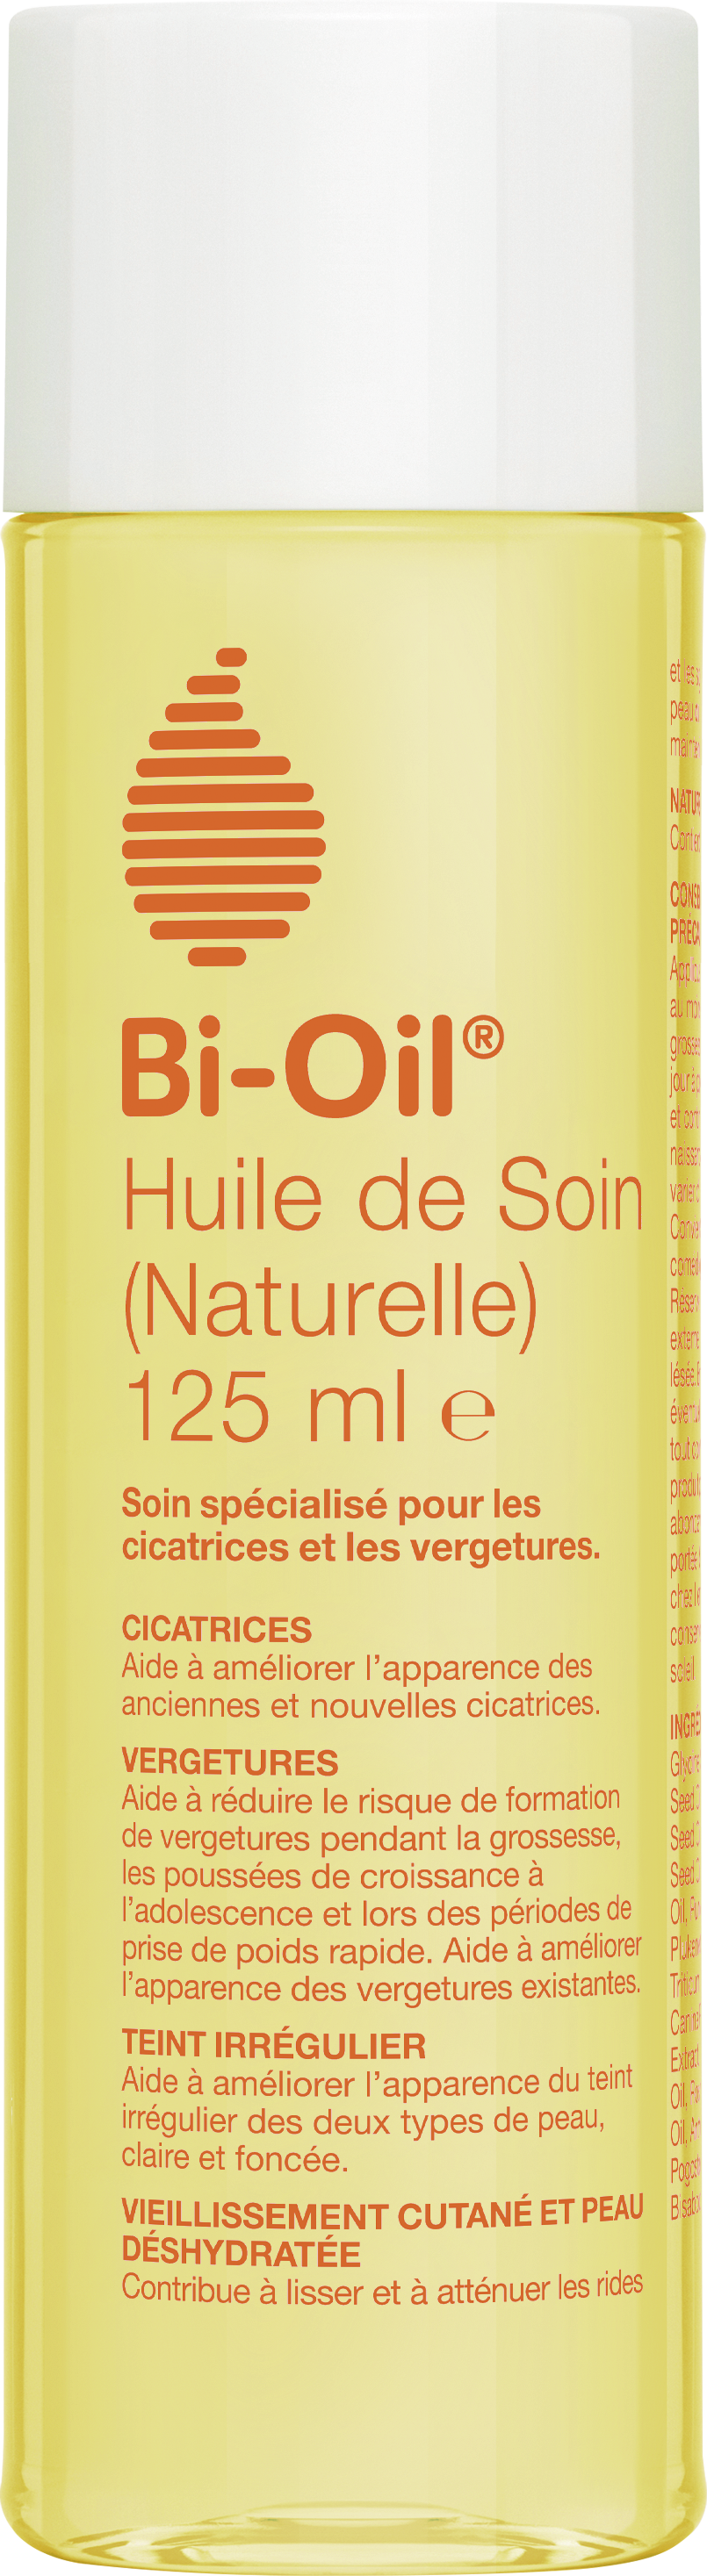 image Bi Oil® Huile de Soin Naturelle – 125 ml – 12 produits